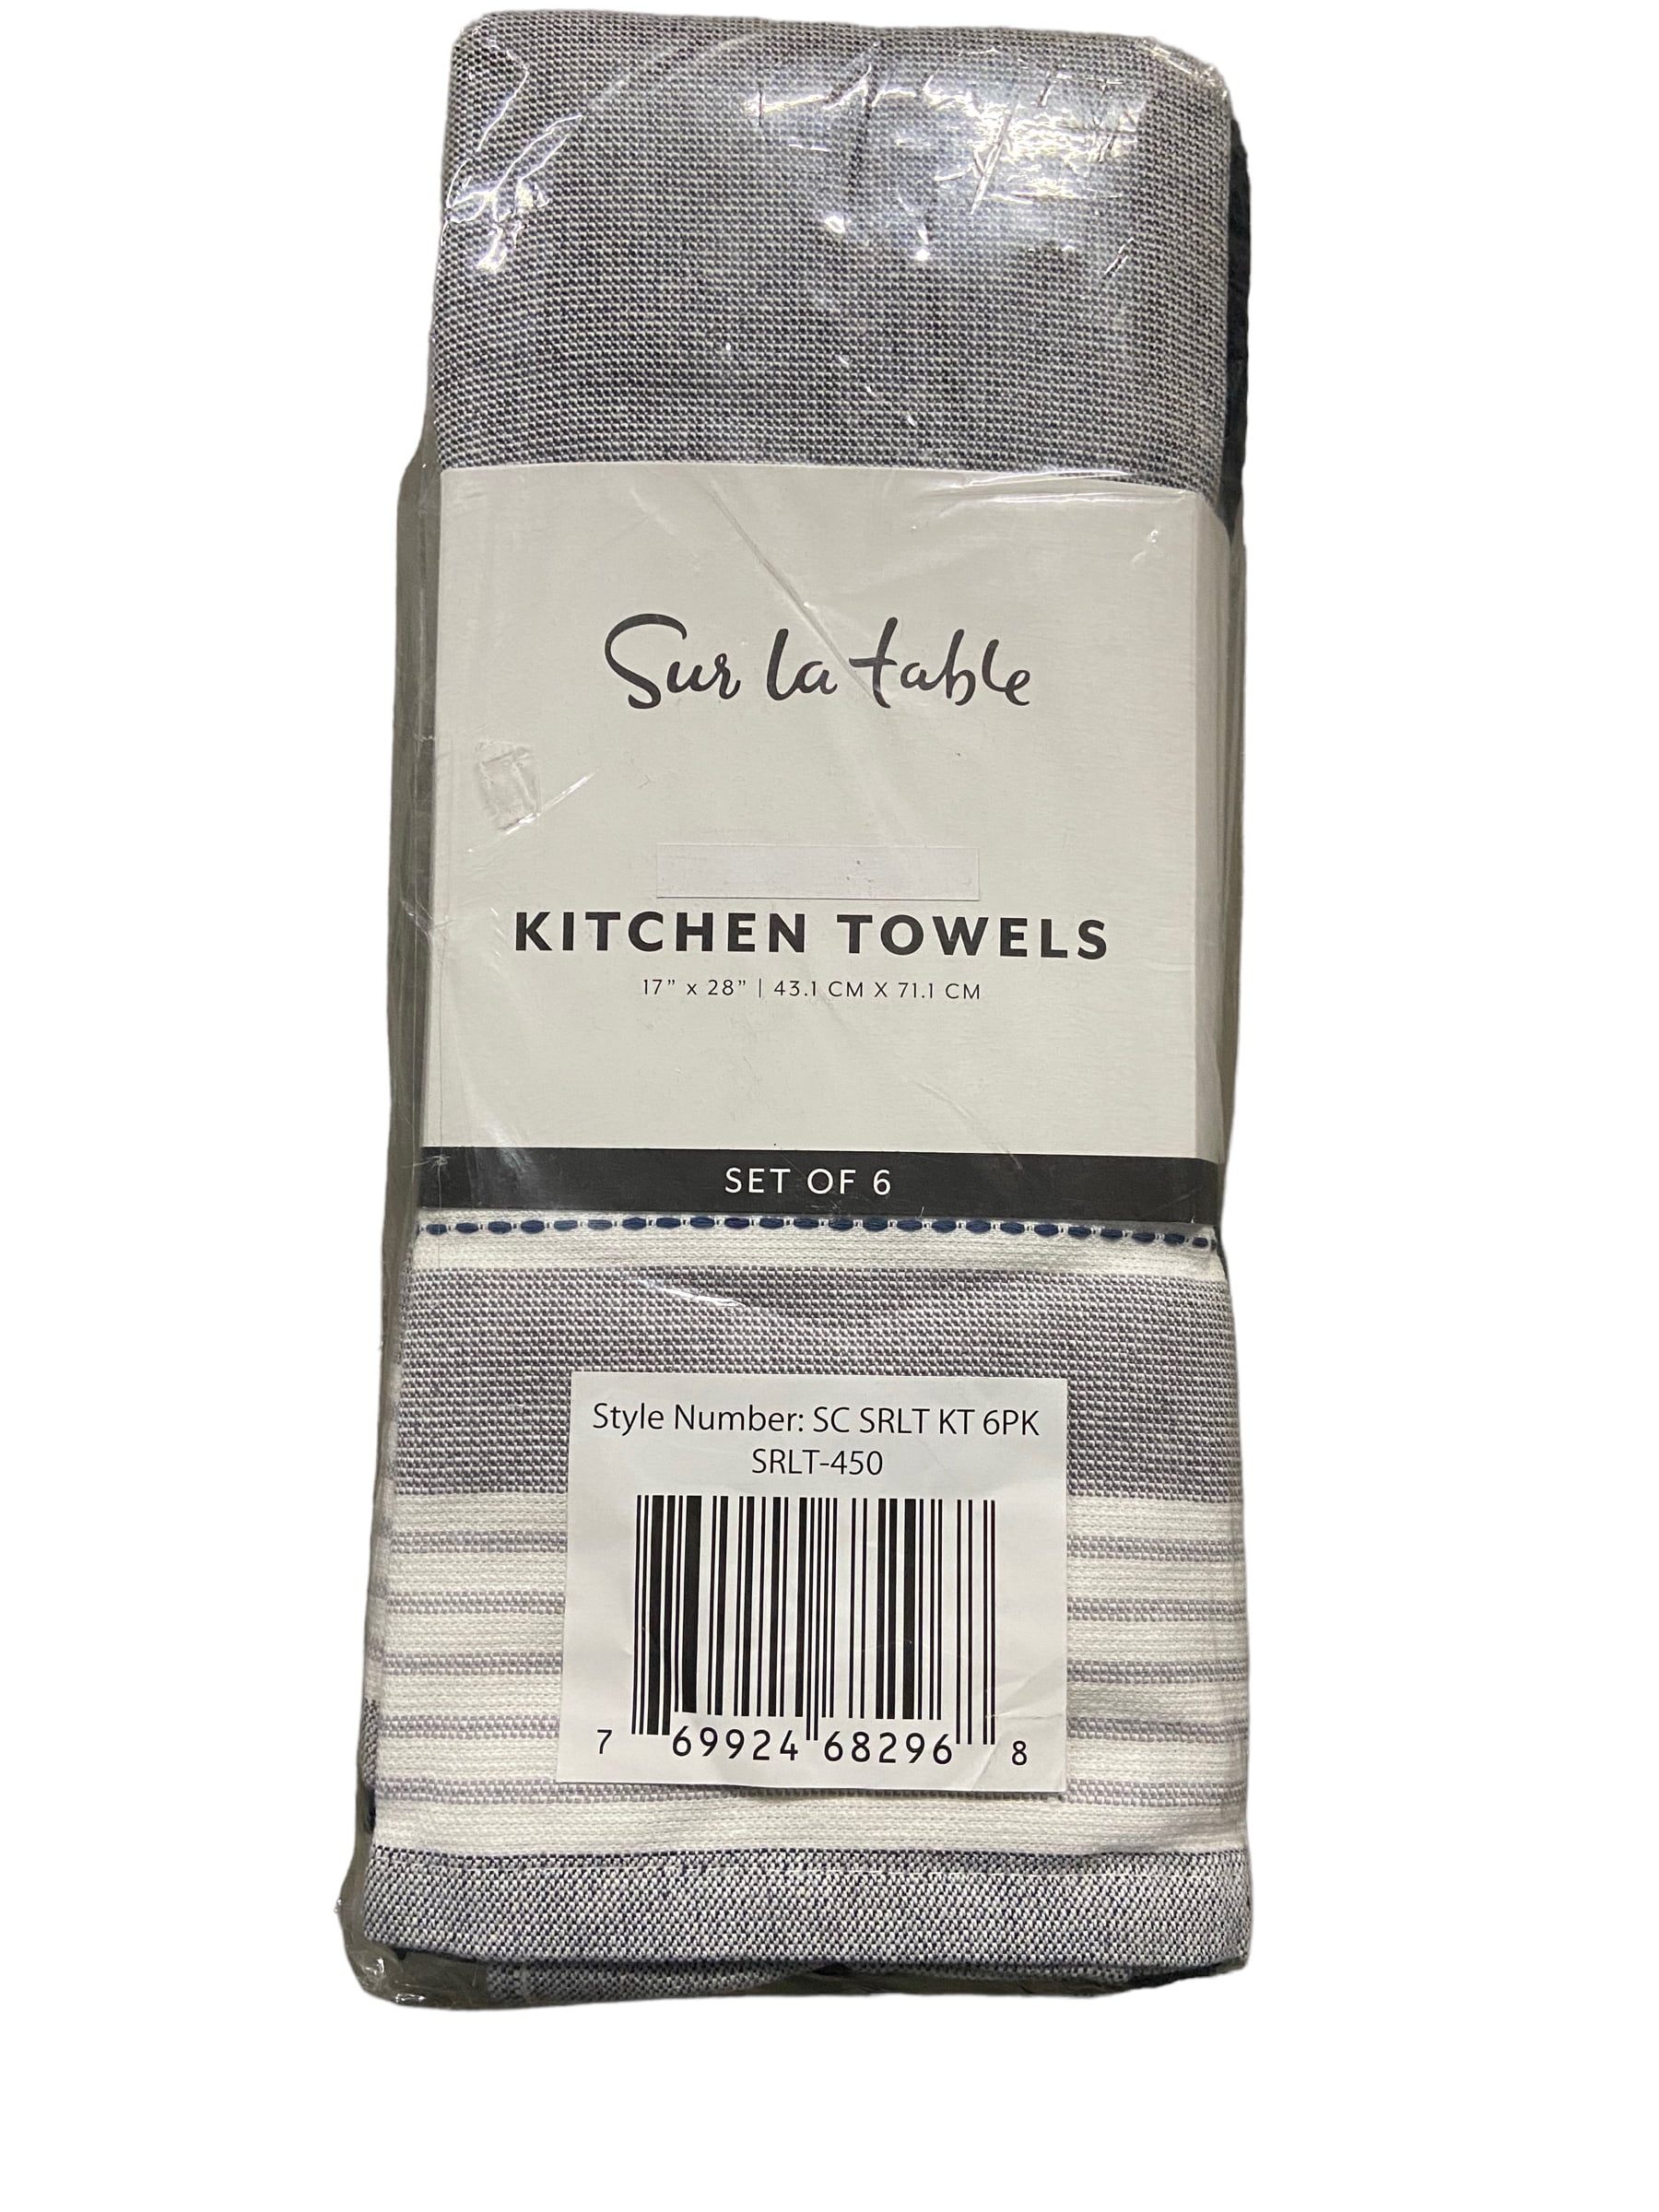 New In Package Sur la table Kitchen Towel 100% Cotton